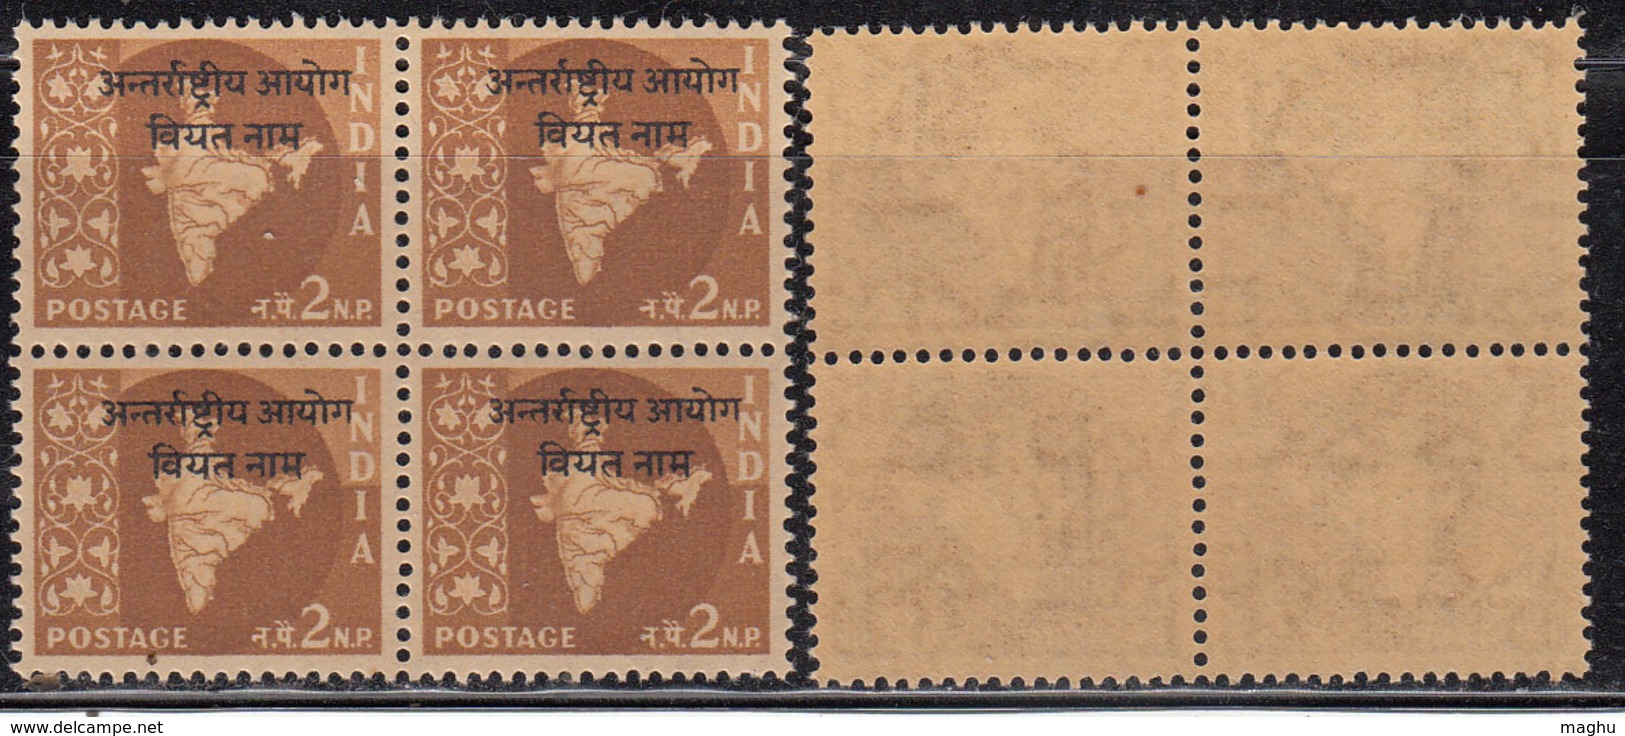 Block Of 4, 2np Ovpt Vietnam On Map Series,  India MNH 1962, Ashokan Watermark, - Franquicia Militar